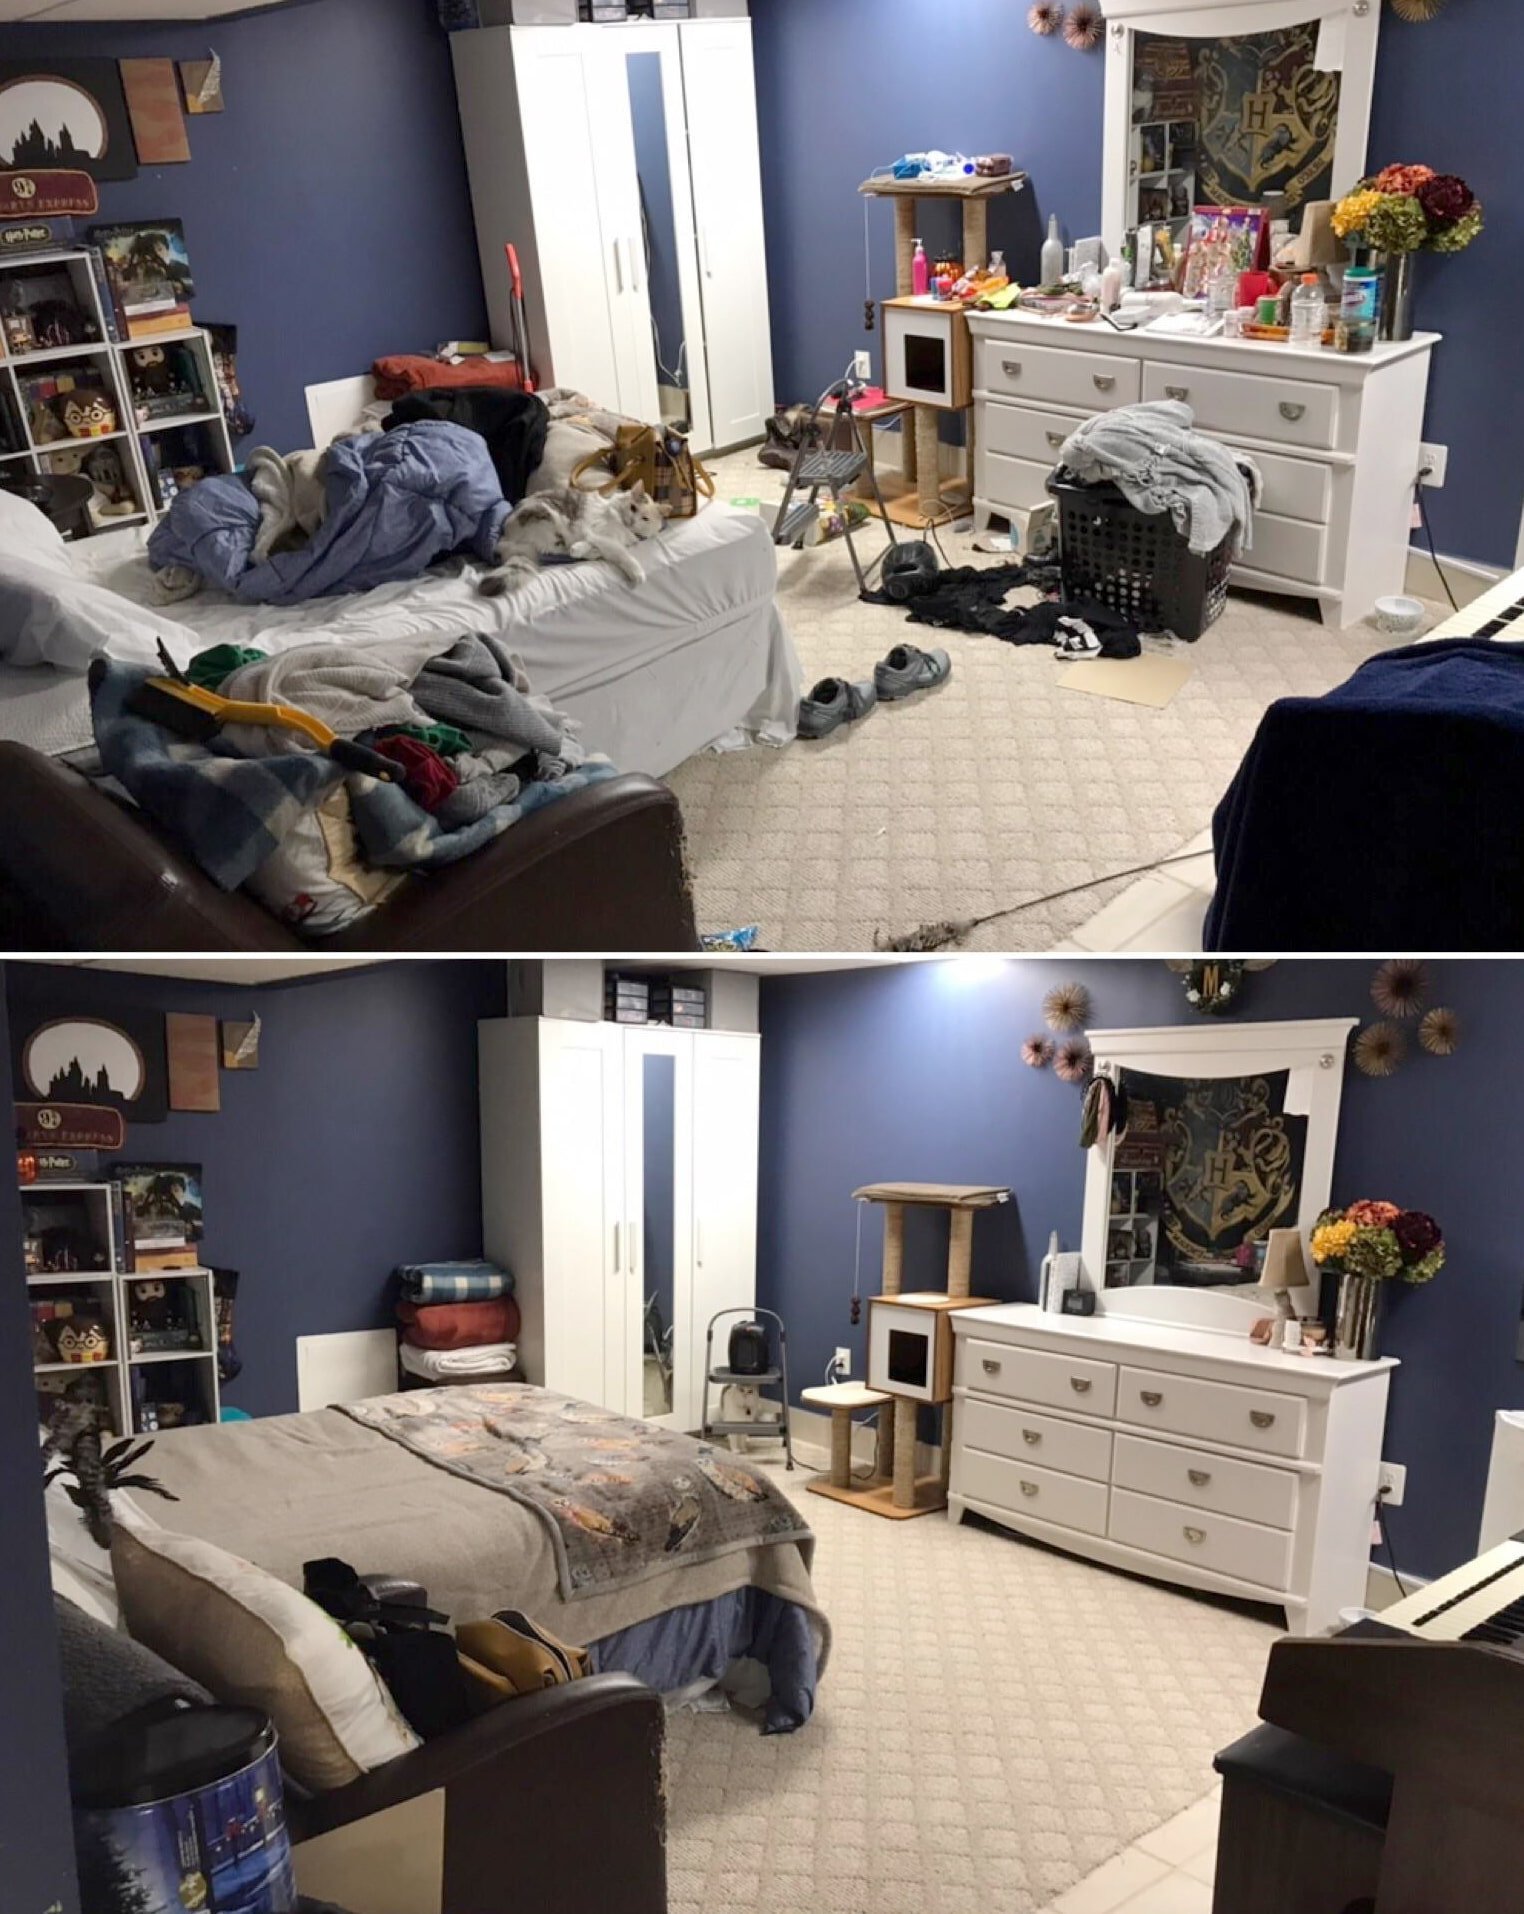 Звон в комнате. Бардак в комнате. Комната до и после уборки. Беспорядок в комнате. Грязная комната.